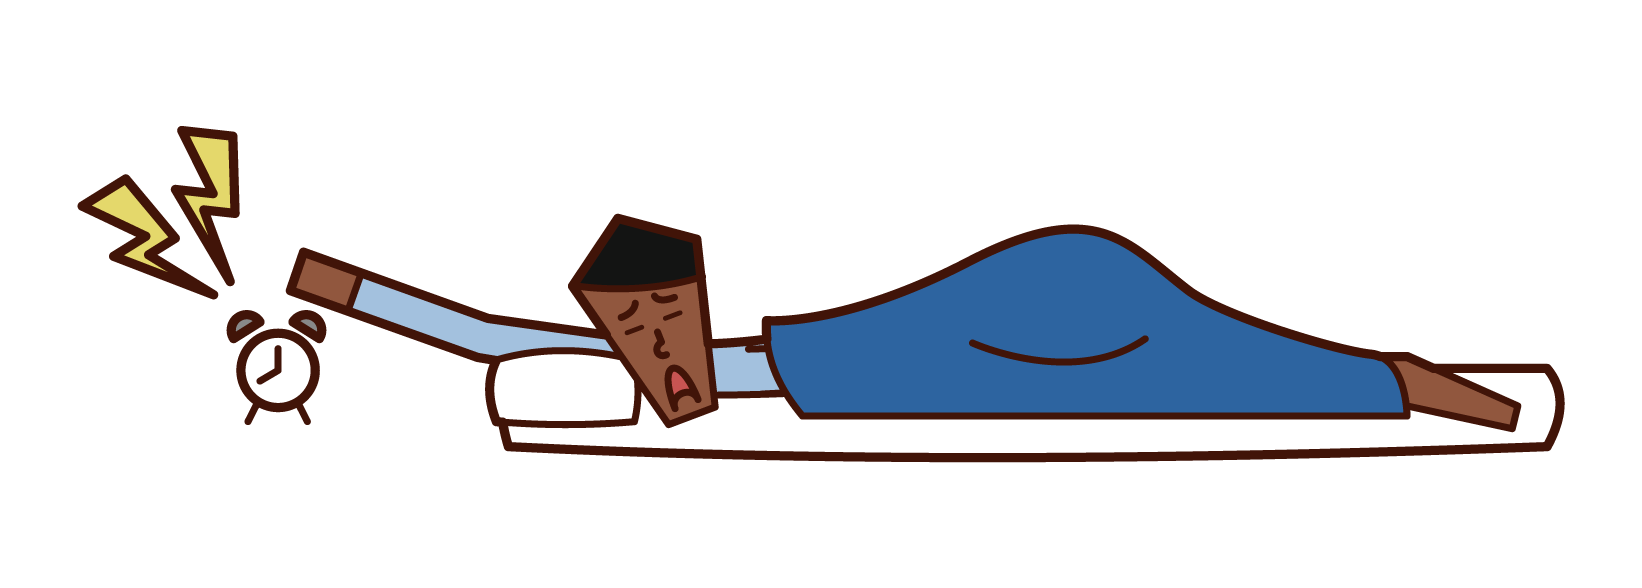 Illustration of a man who stops alarm clock alarm